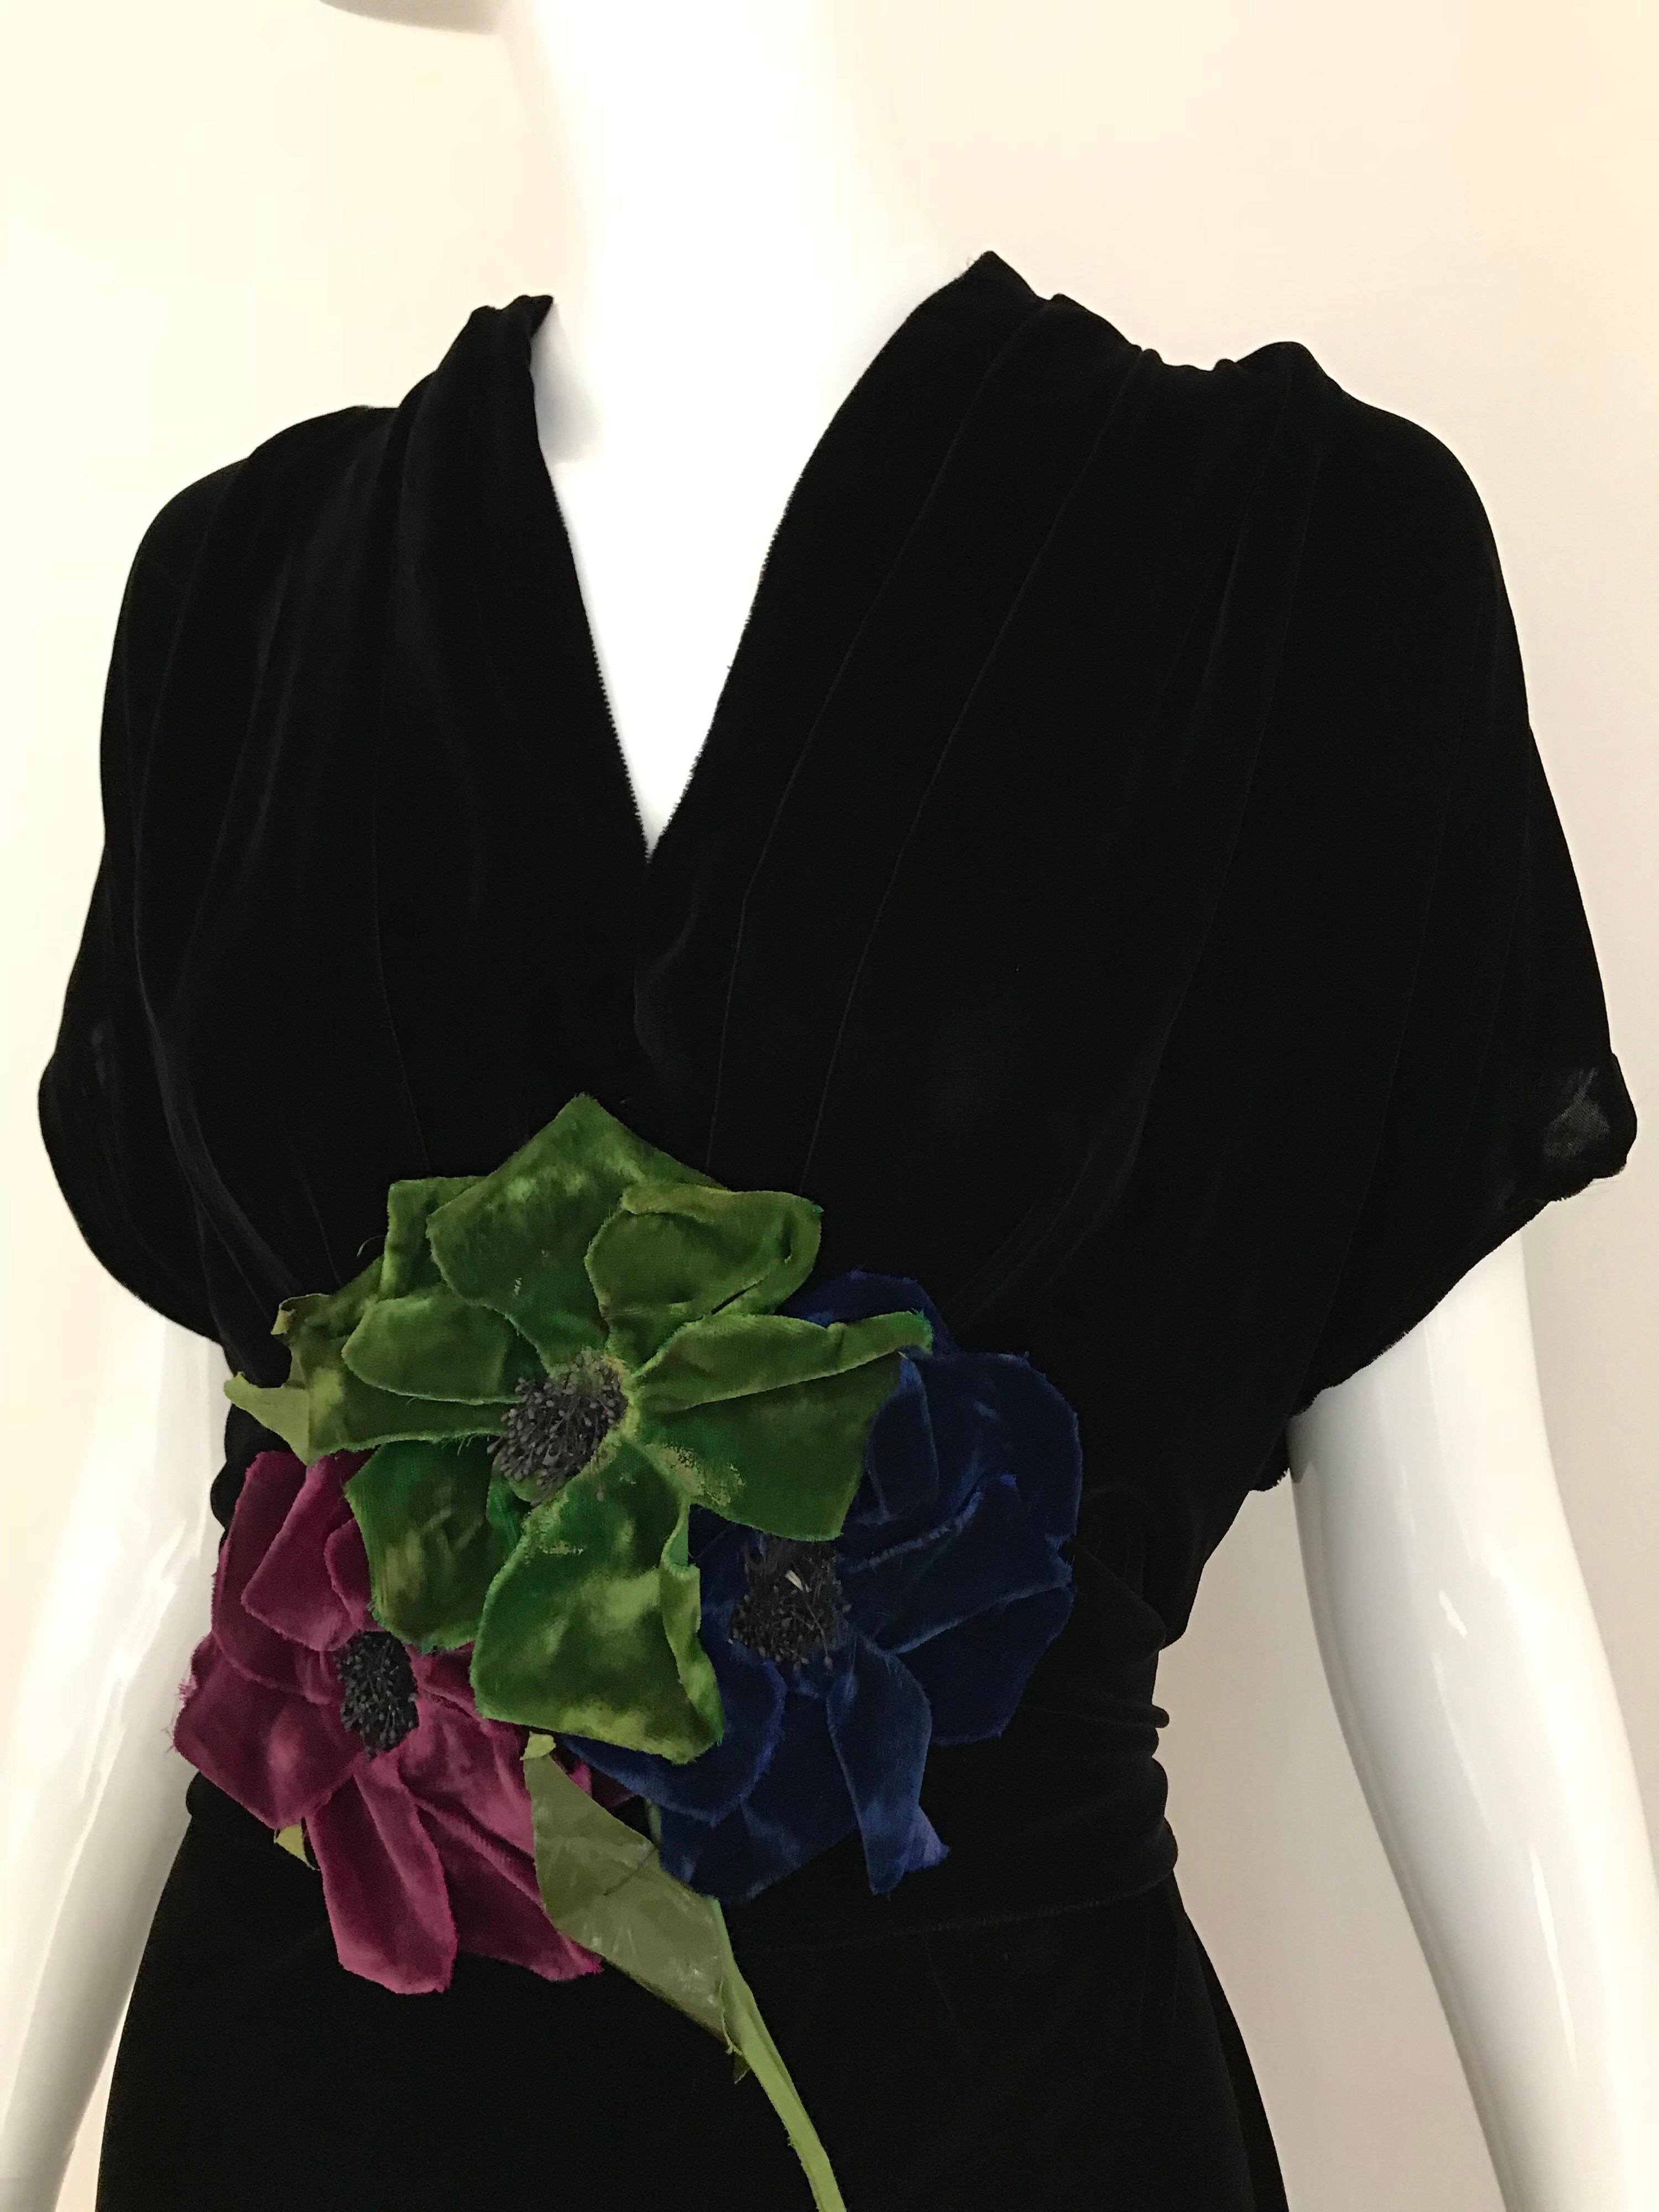 Elegant larger size 30s black velvet gown with floral applique.
Size: Large
Bust: 40